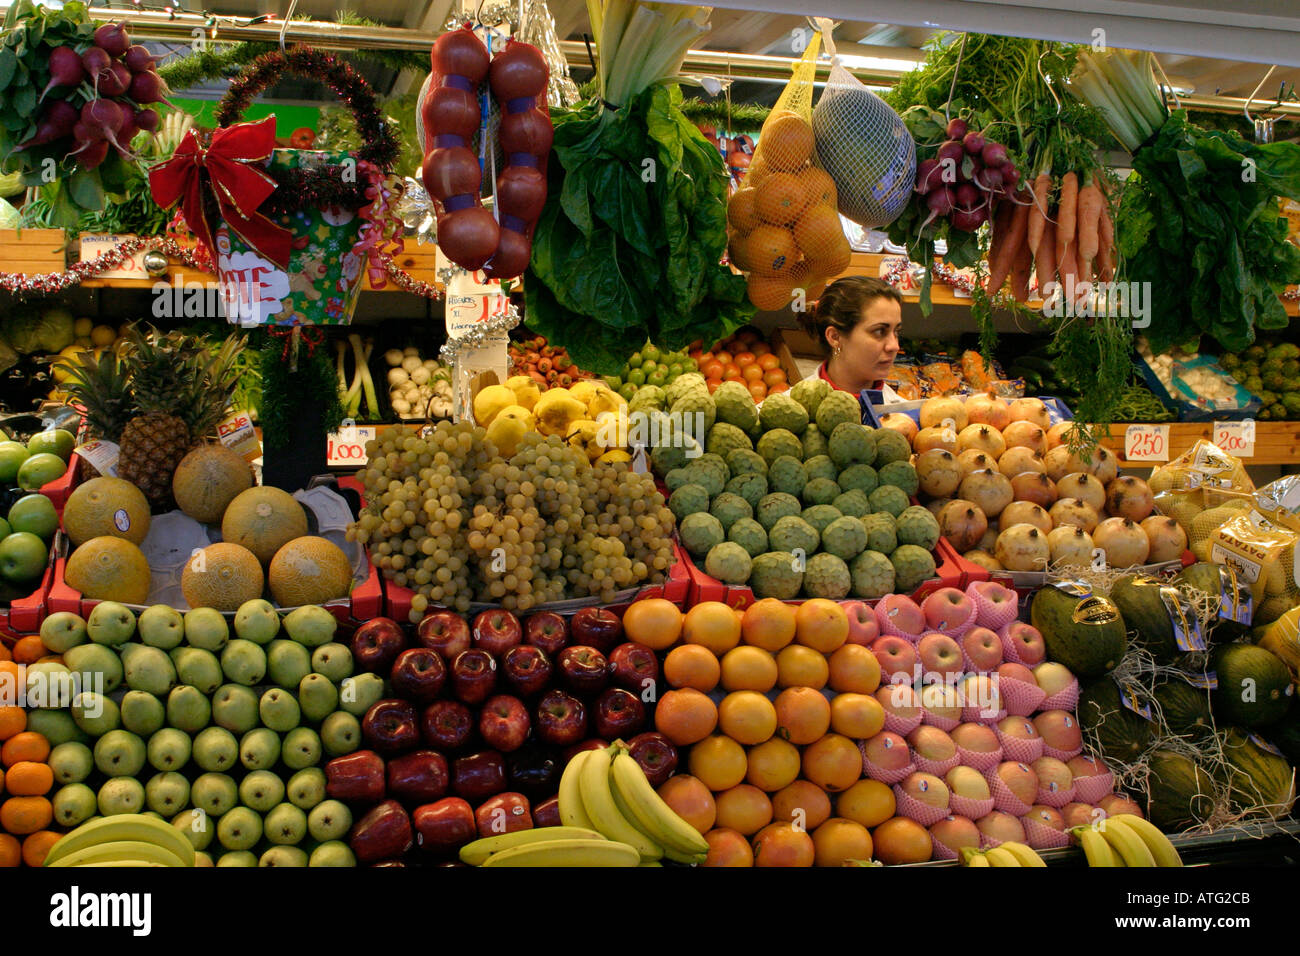 Spanish woman fruit seller gibraltar indoor market british dependent territory europe Stock Photo